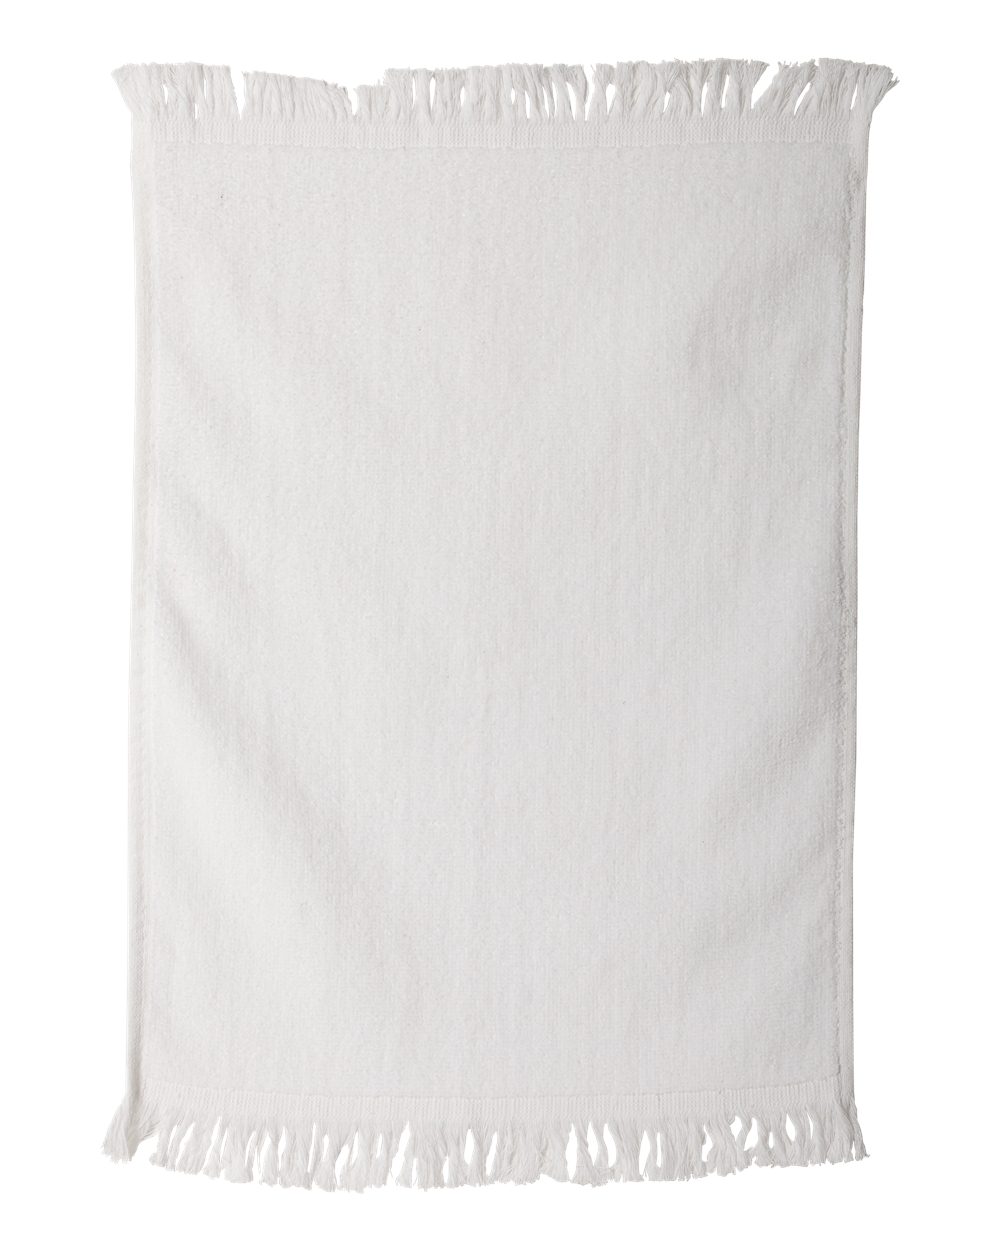 Carmel Towel Company Fringed Towel - C1118